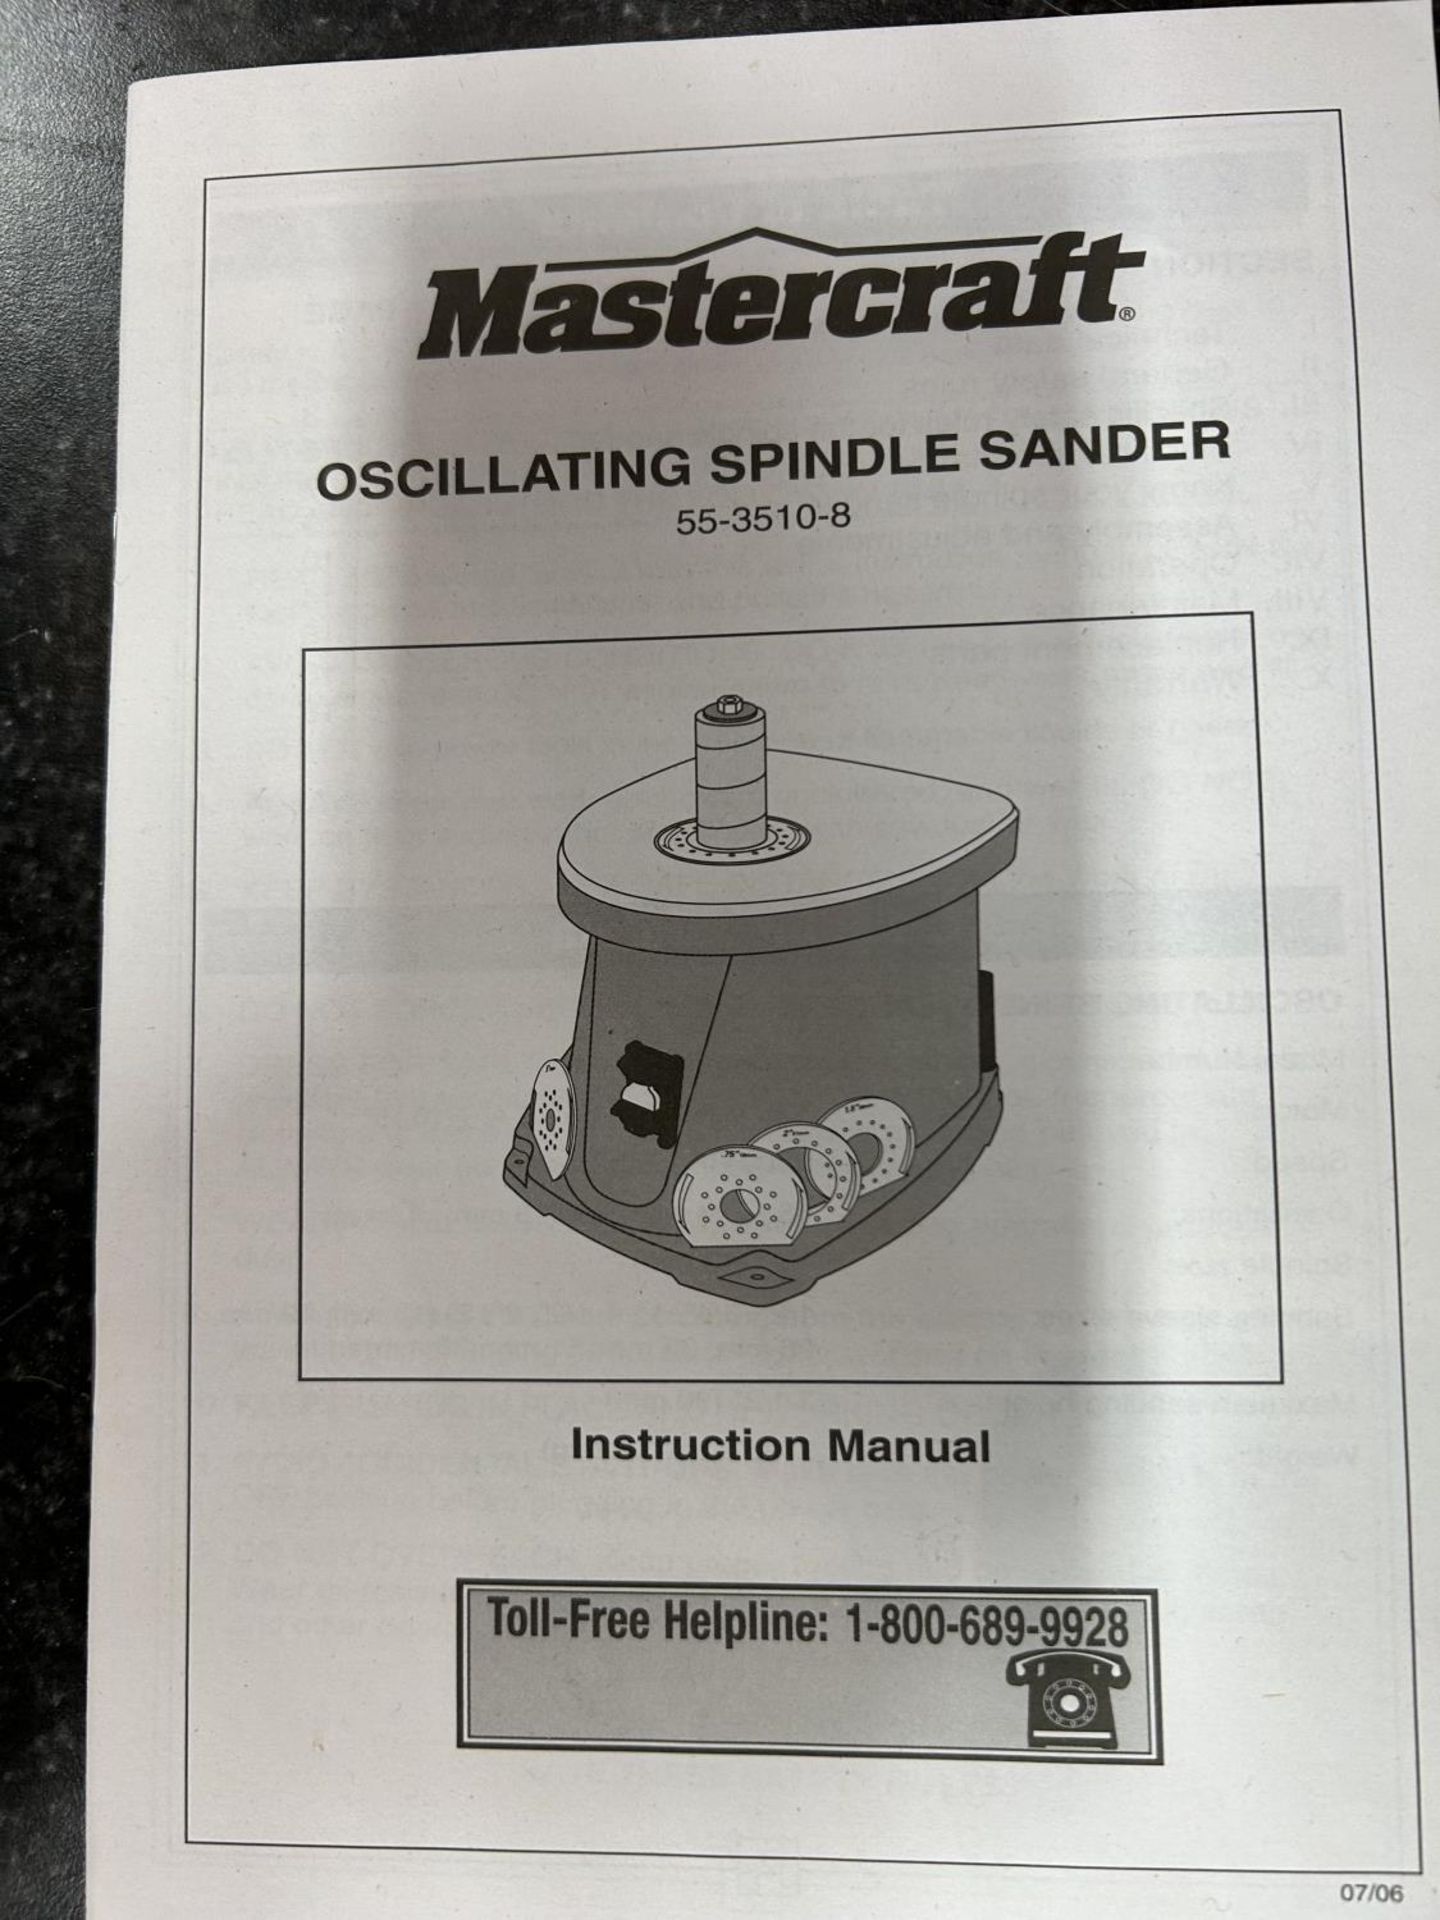 MASTERCRAFT OSCILLATING SPINDLE SANDER ON TABLE - Image 2 of 6